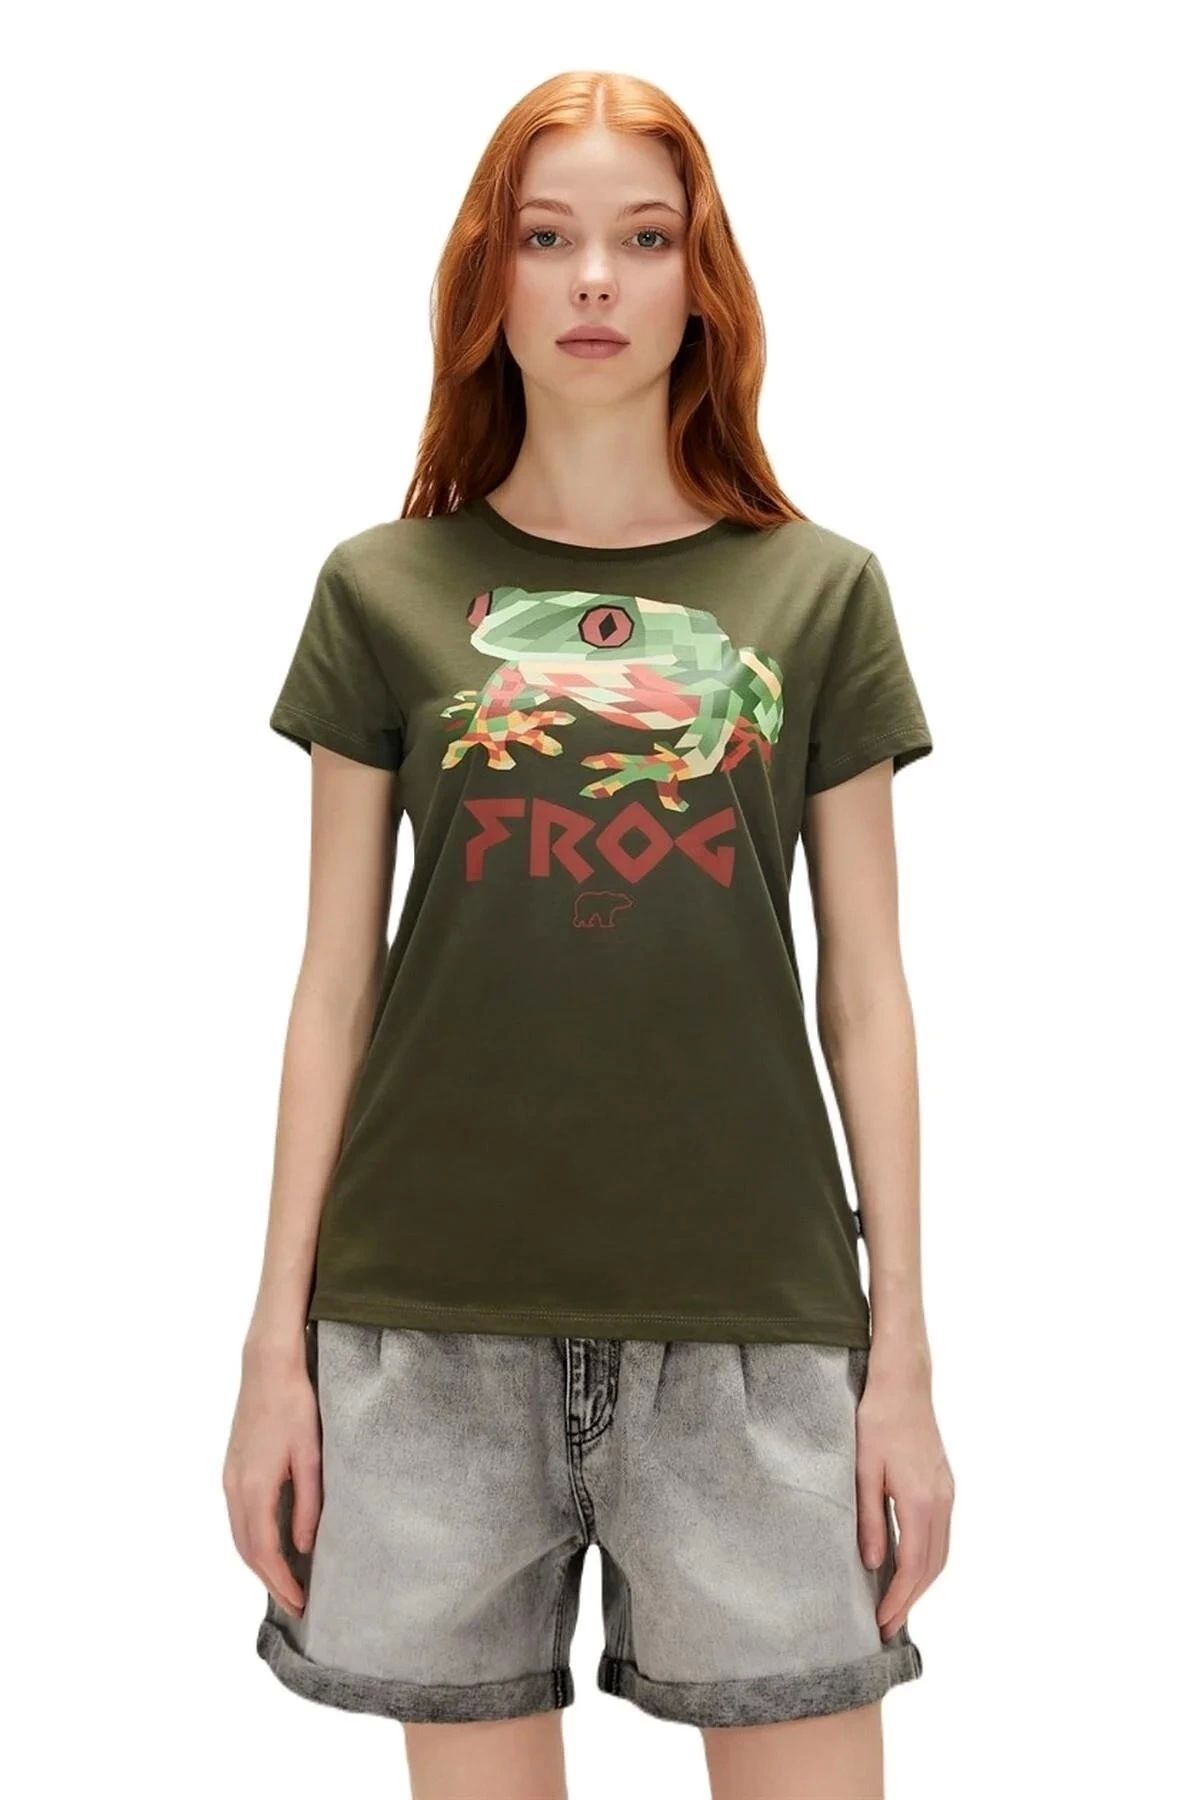 Bad Bear Frog 0 Yaka Kadın Tshirt - Khaki